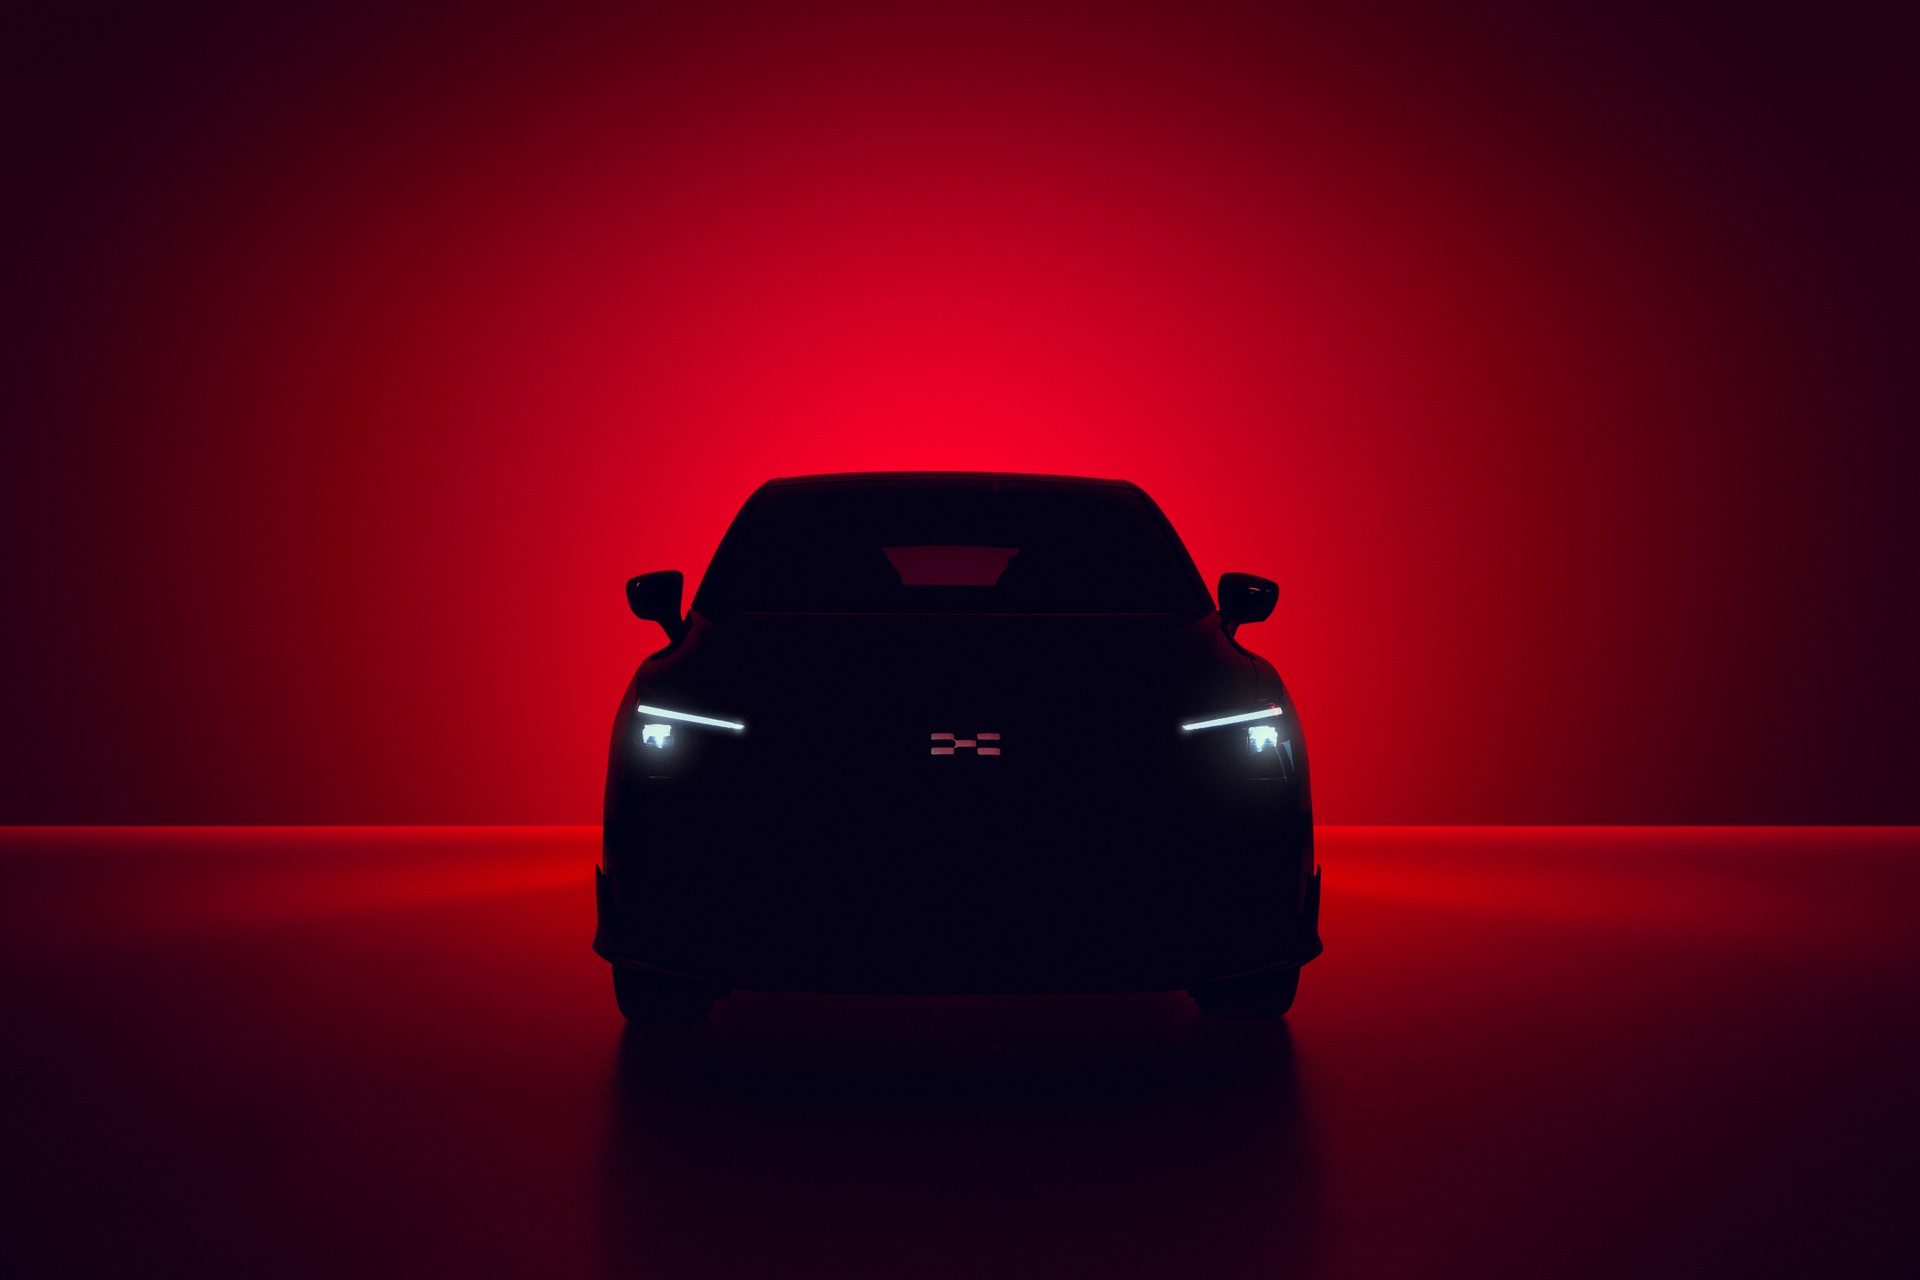 Aiways U6, nuovi teaser del SUV Coupé elettrico